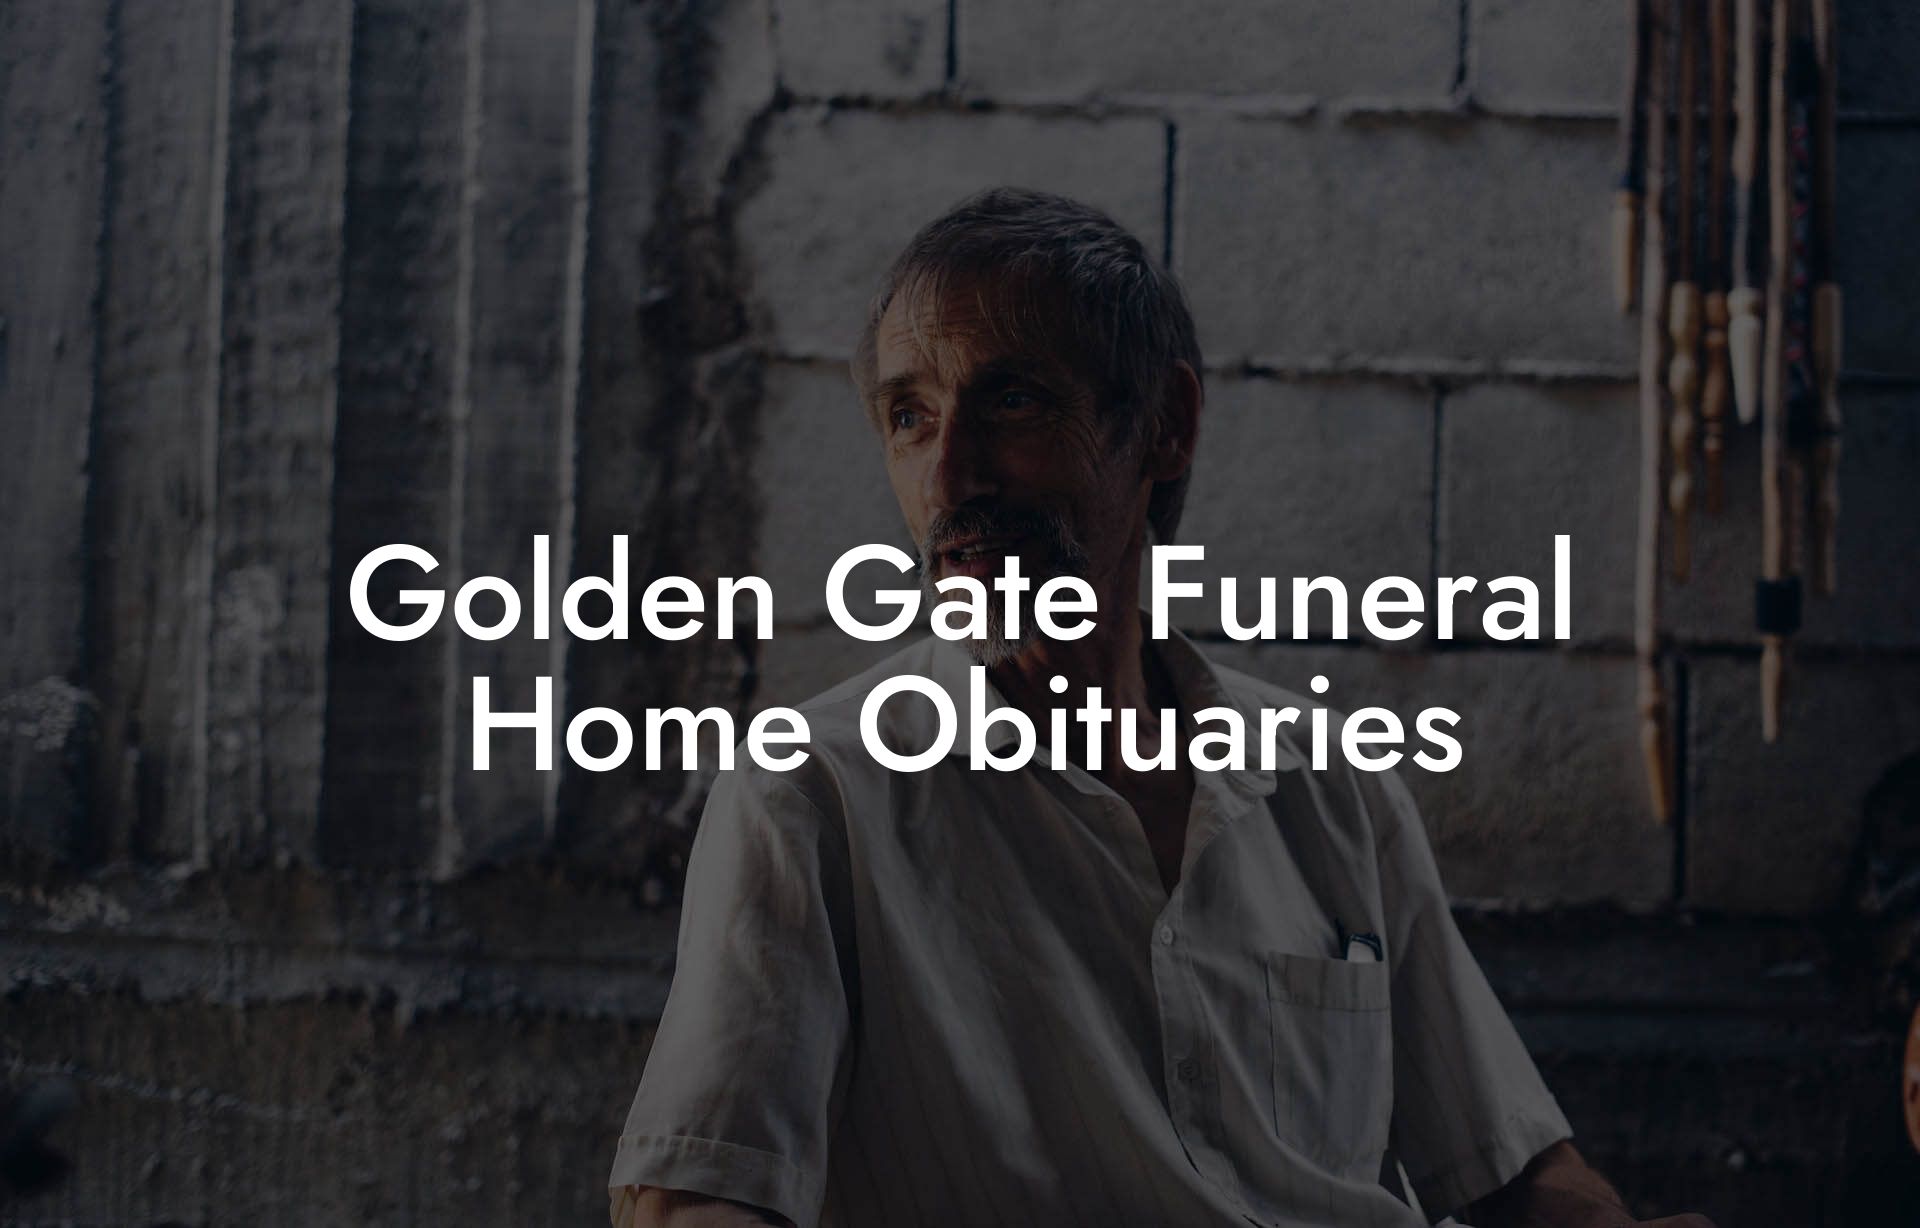 Golden Gate Funeral Home Obituaries